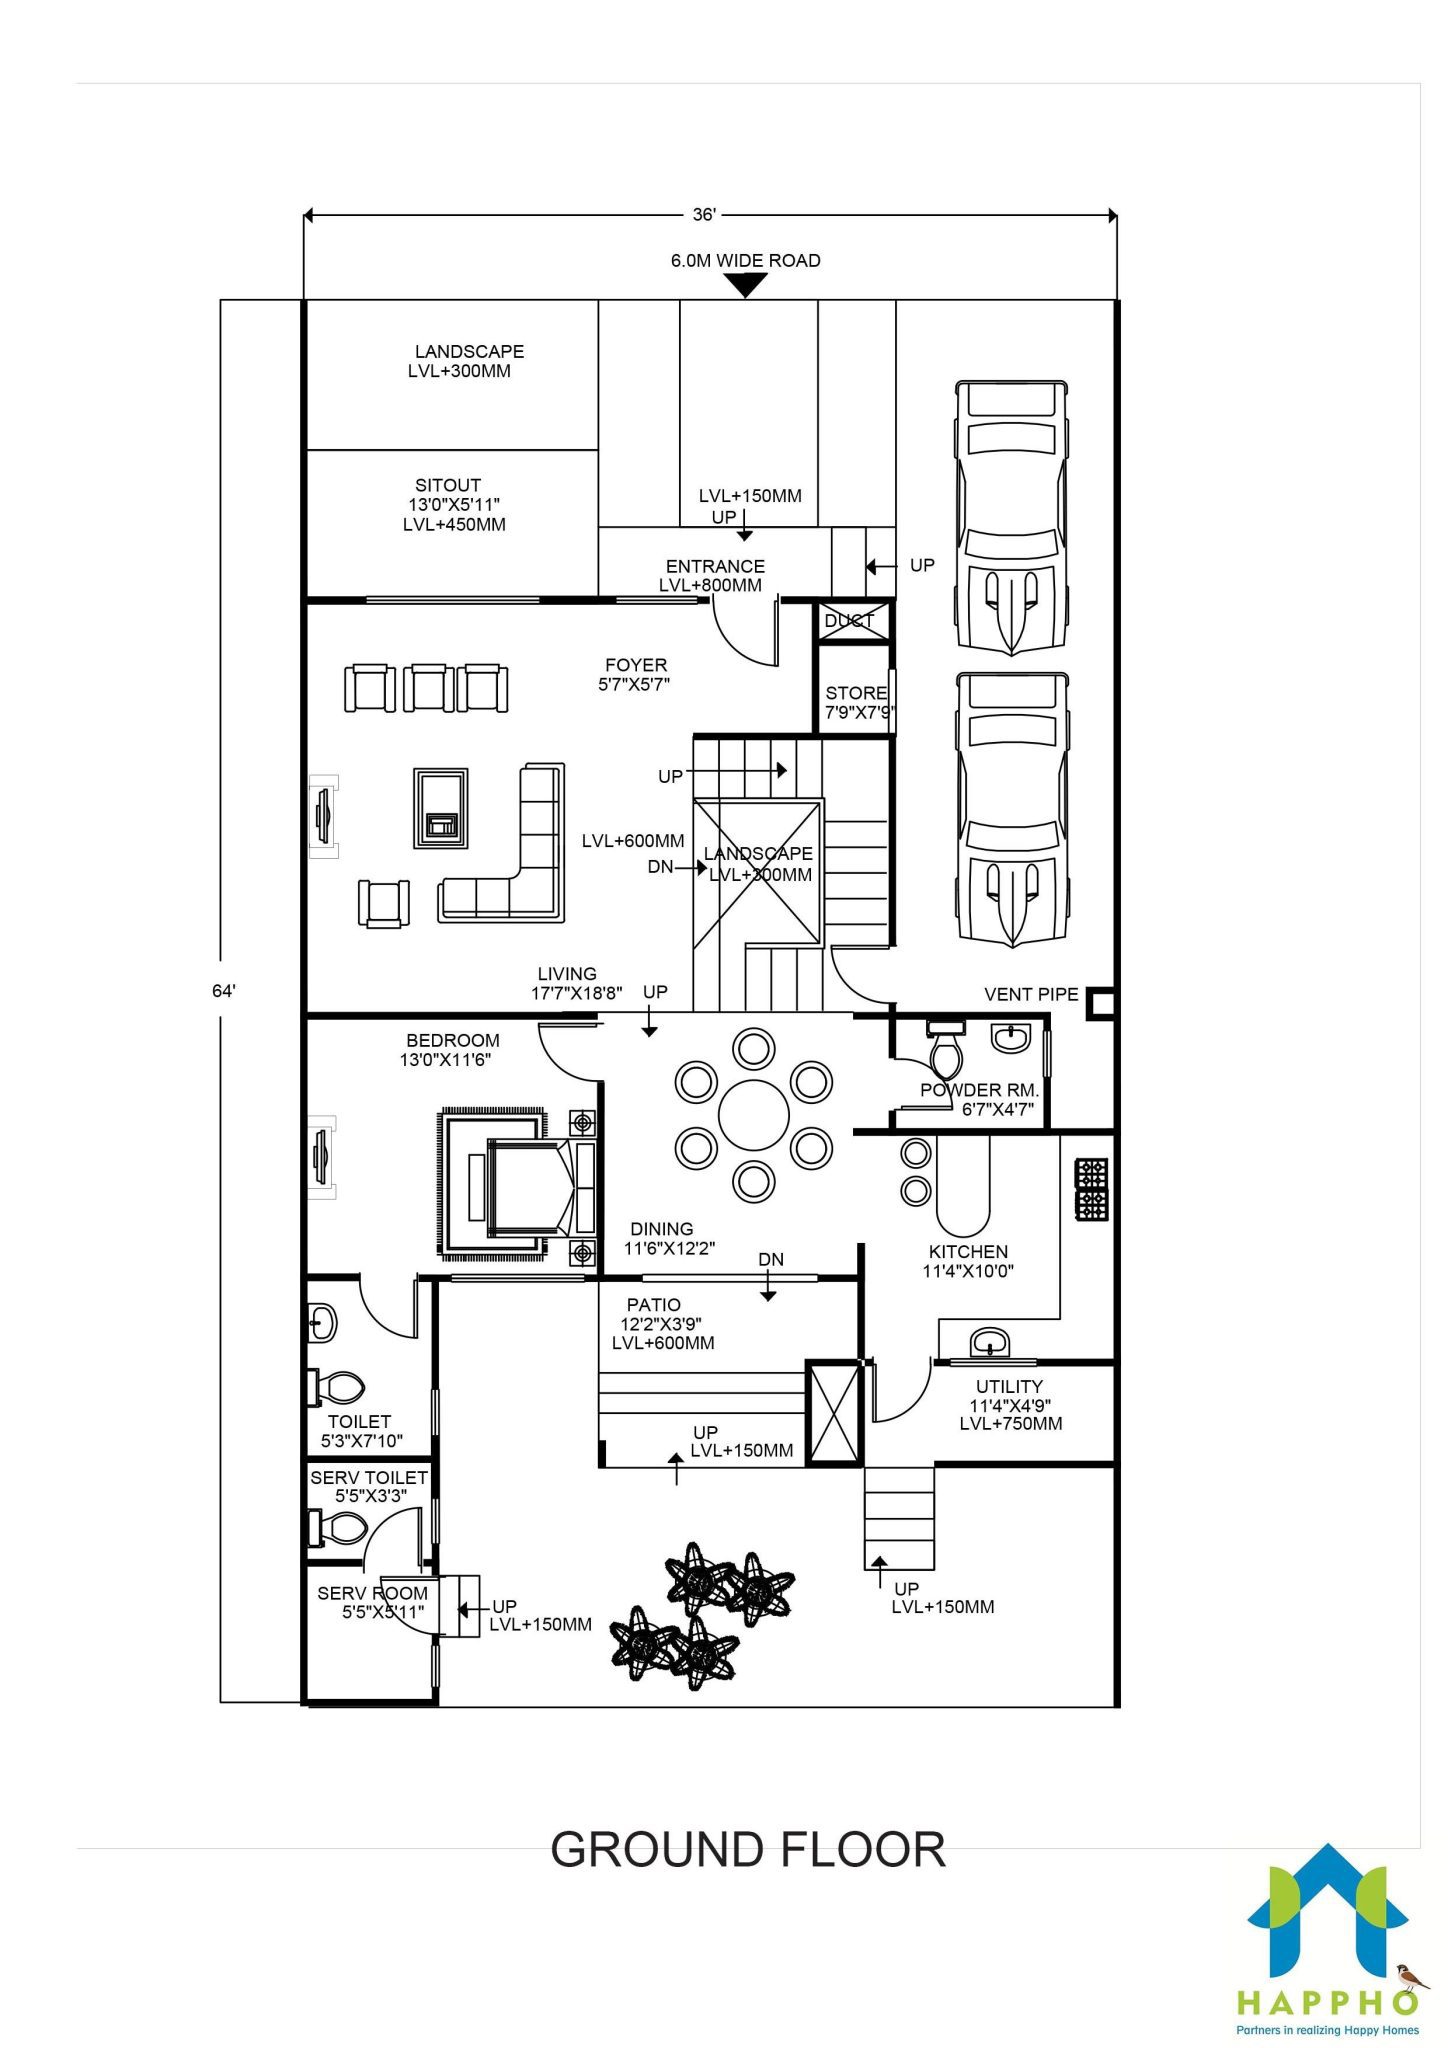 65 x 40 feet, 2600 square feet, floor plan, Duplex floor plan